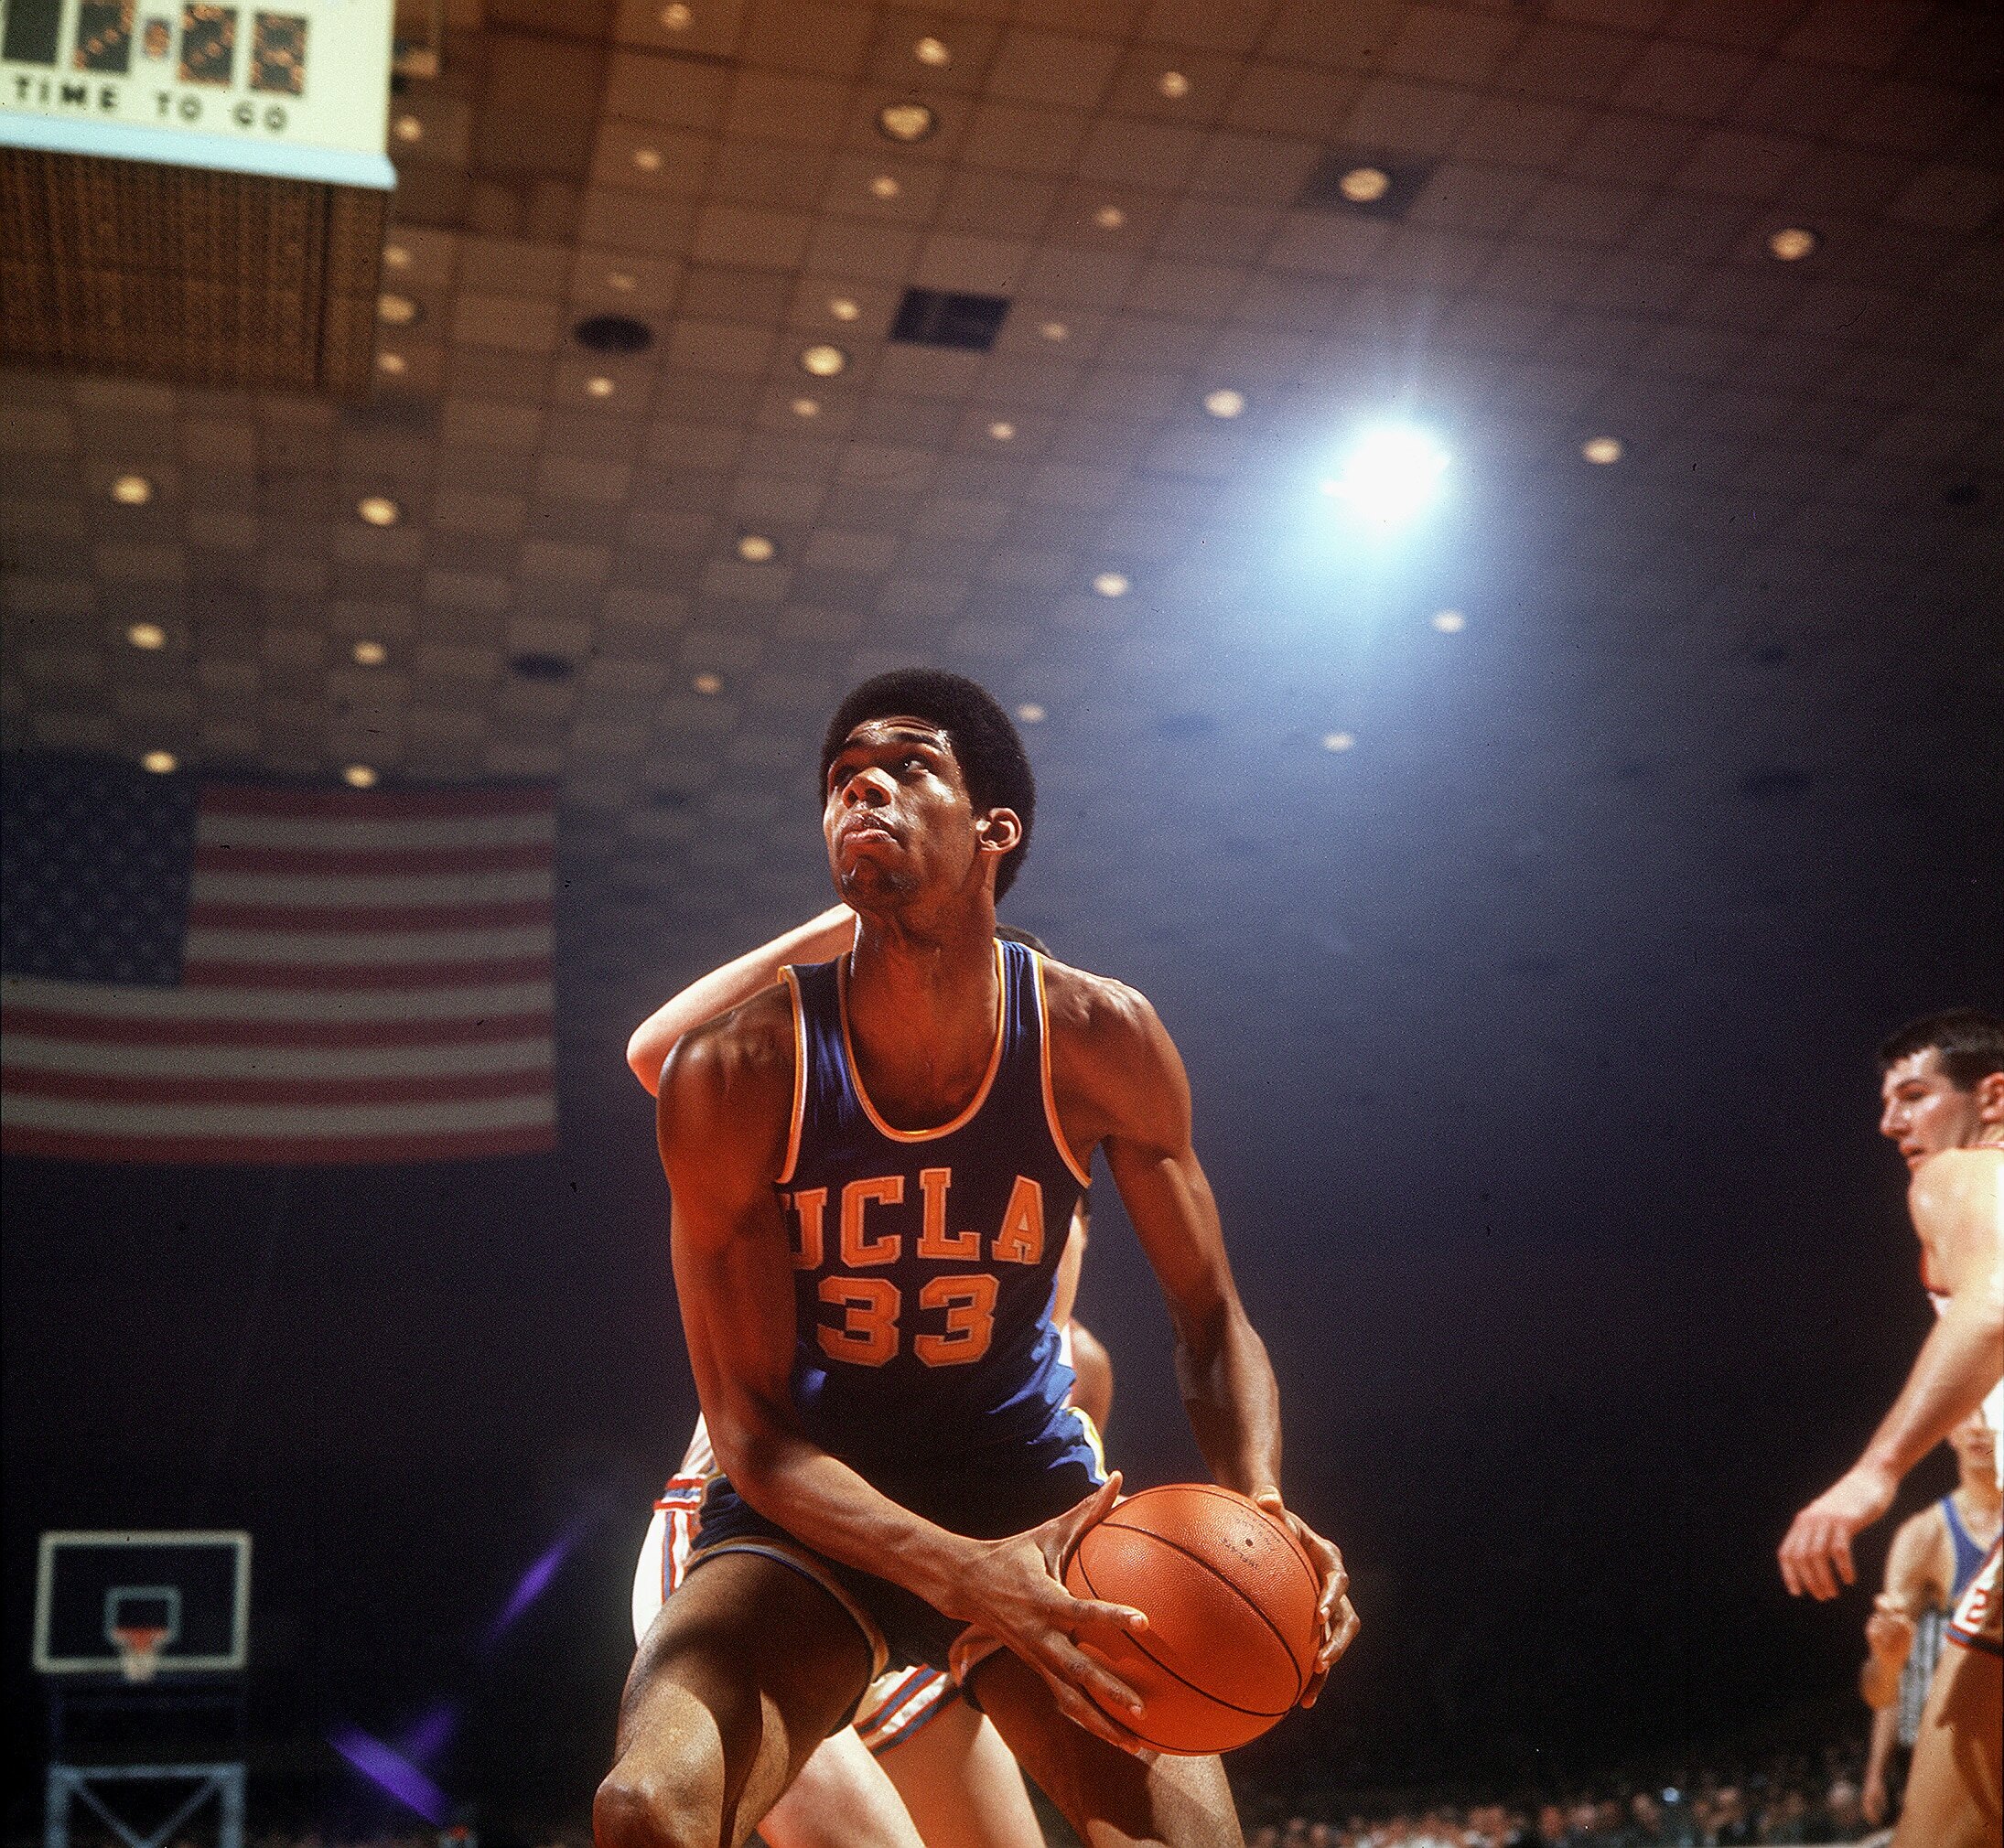 Kareem Abdul-Jabbar, also known as Lew Alcindor back then, won three NCAA championships in UCLA. (Photo via NCAA.com)